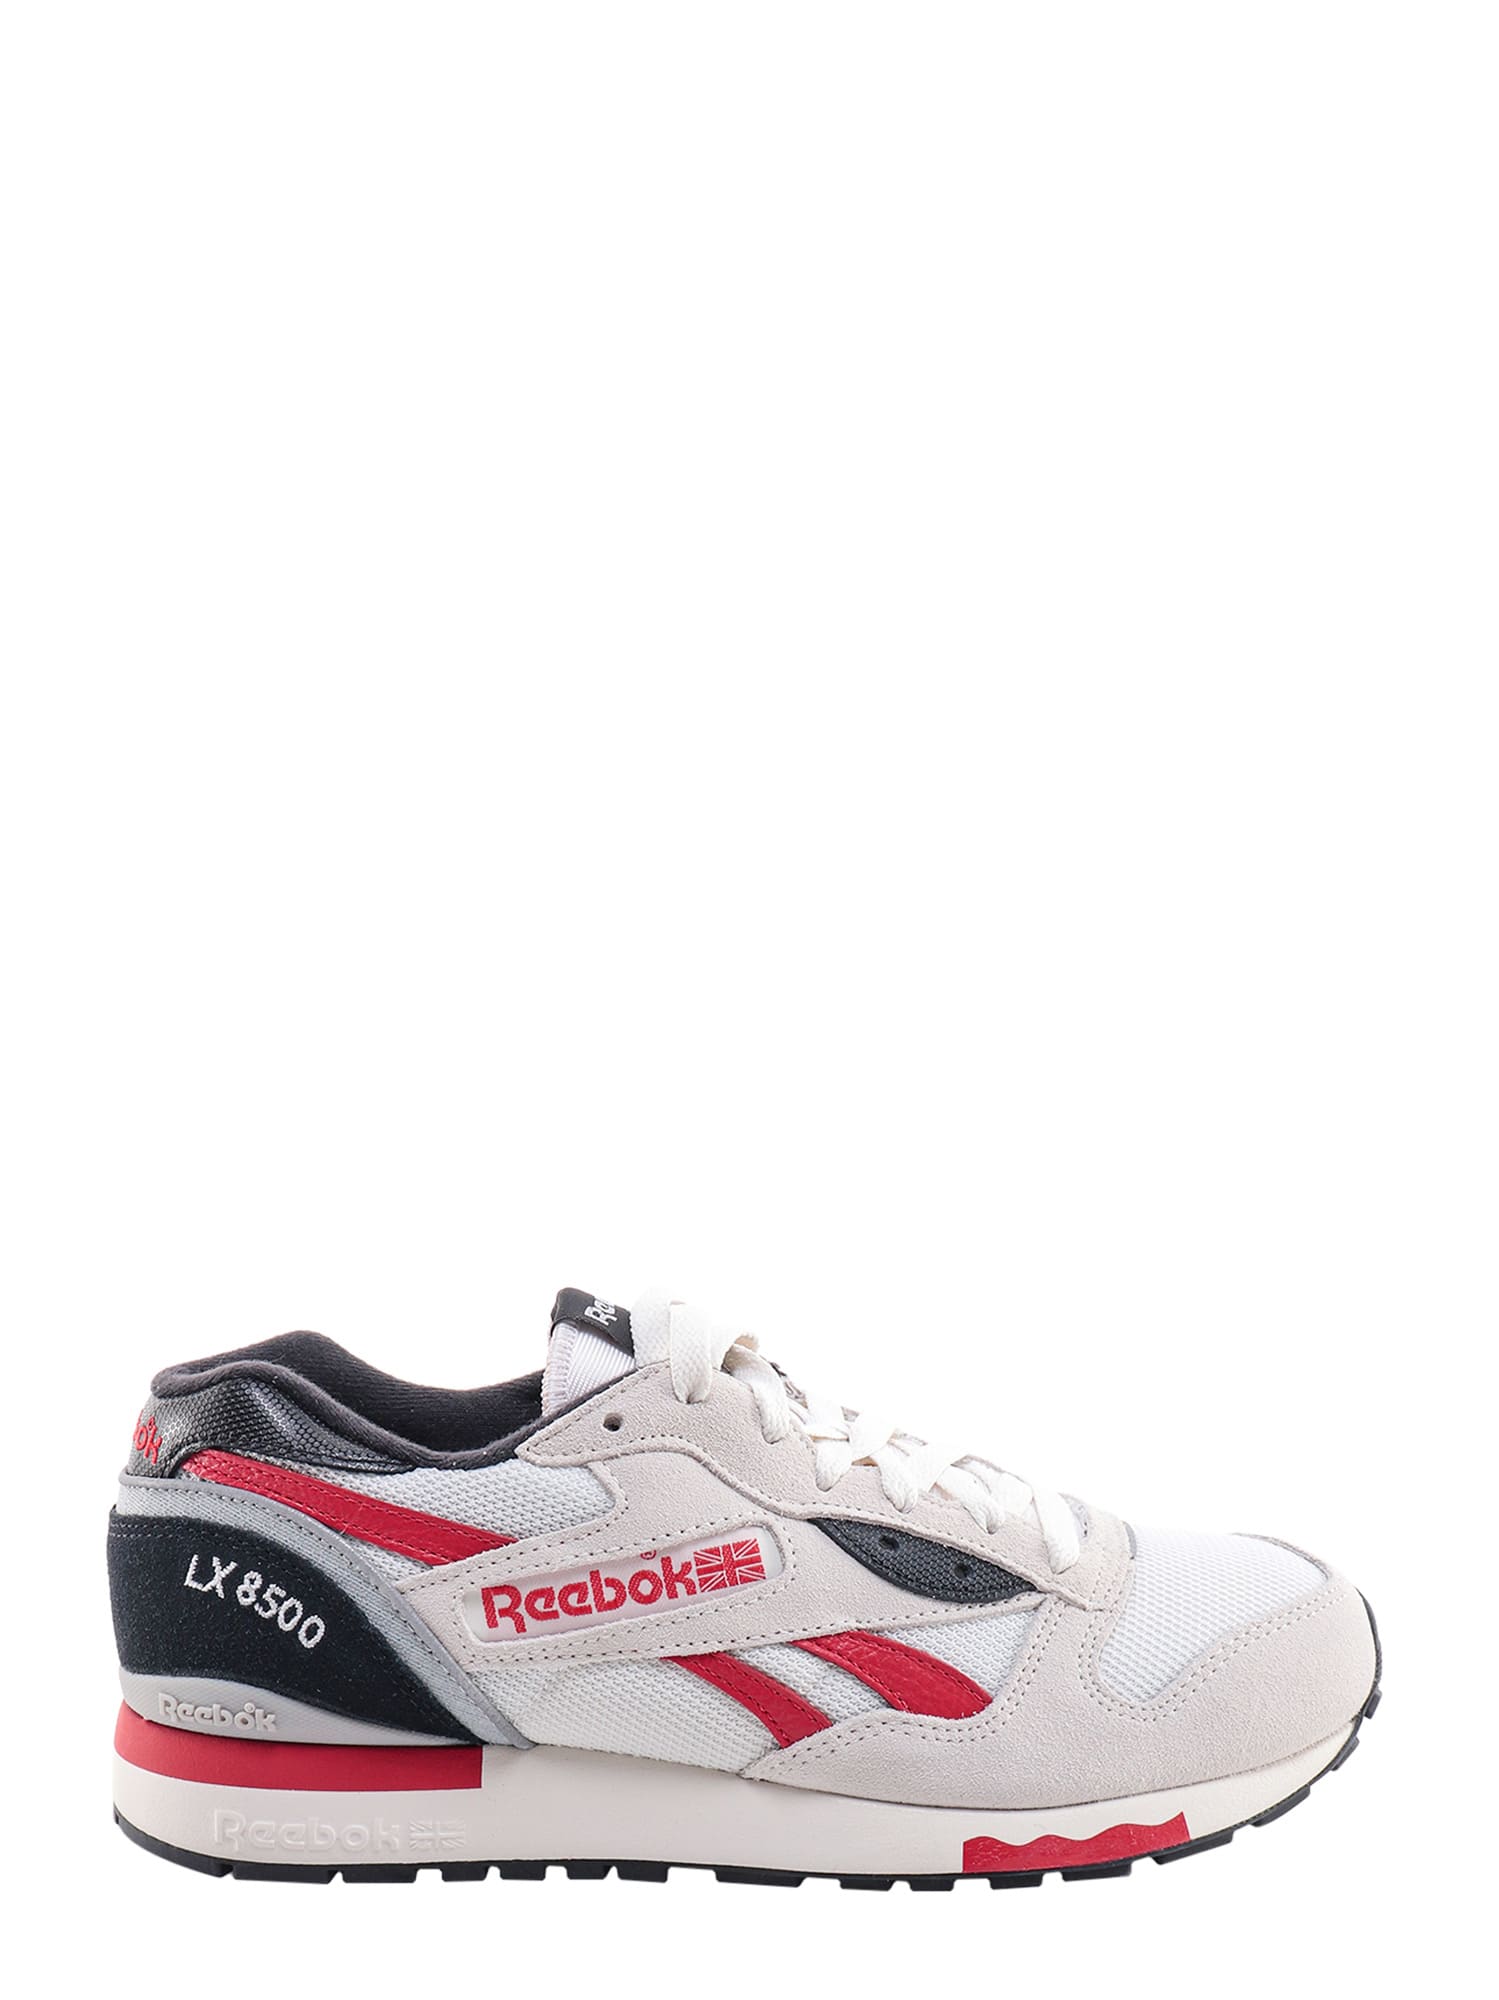 Reebok Lx8500 Sneakers